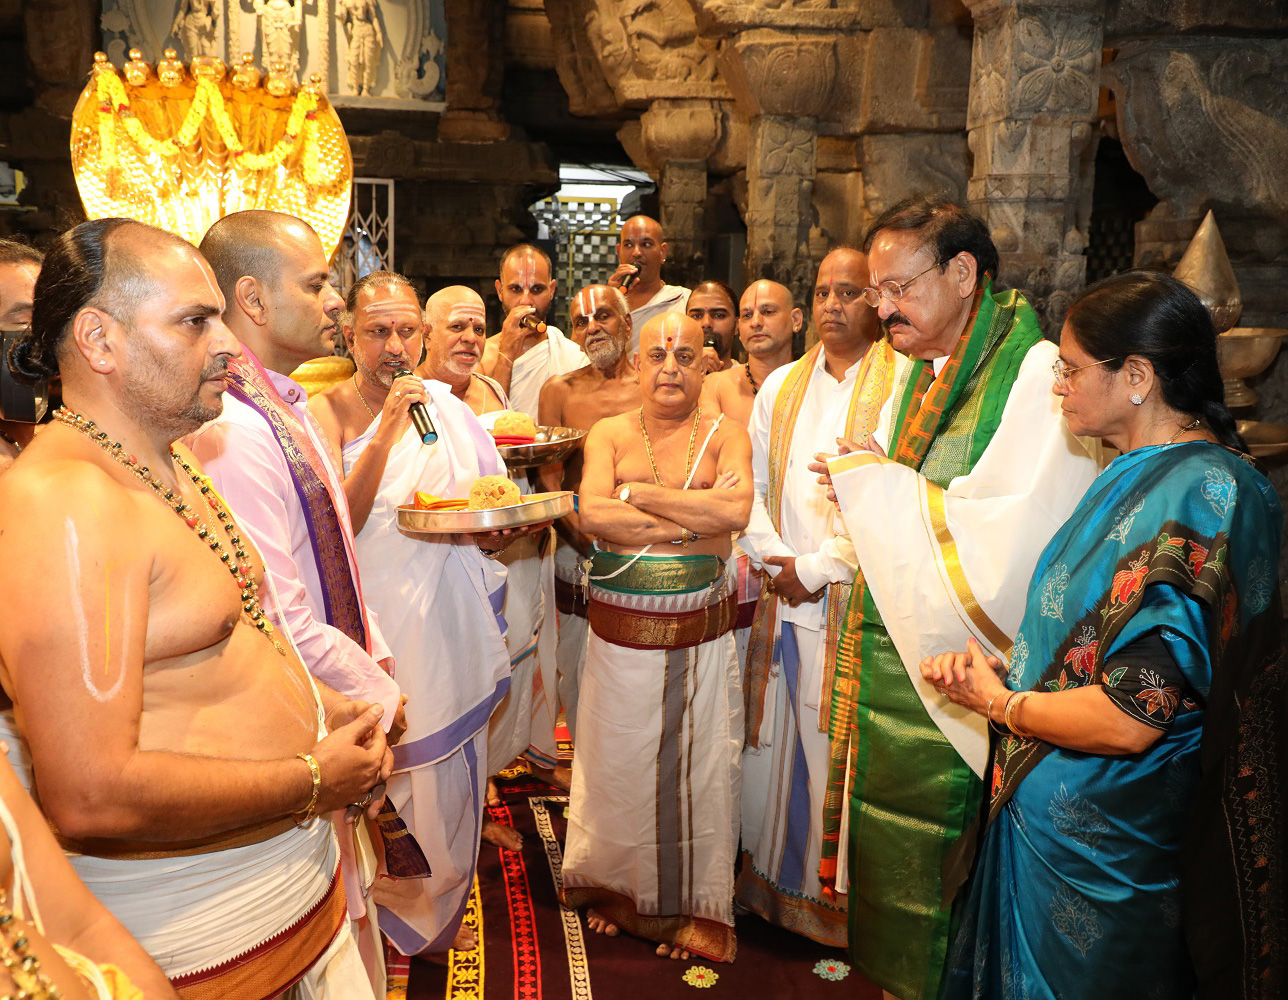 The Vice President, Shri M. Venkaiah Naidu, Smt. Usha Naidu and other family members receiving blessings from temple priests at Lord Sri Venkasteswara temple, in Tirumala, Andhra Pradesh on June 04, 2019.